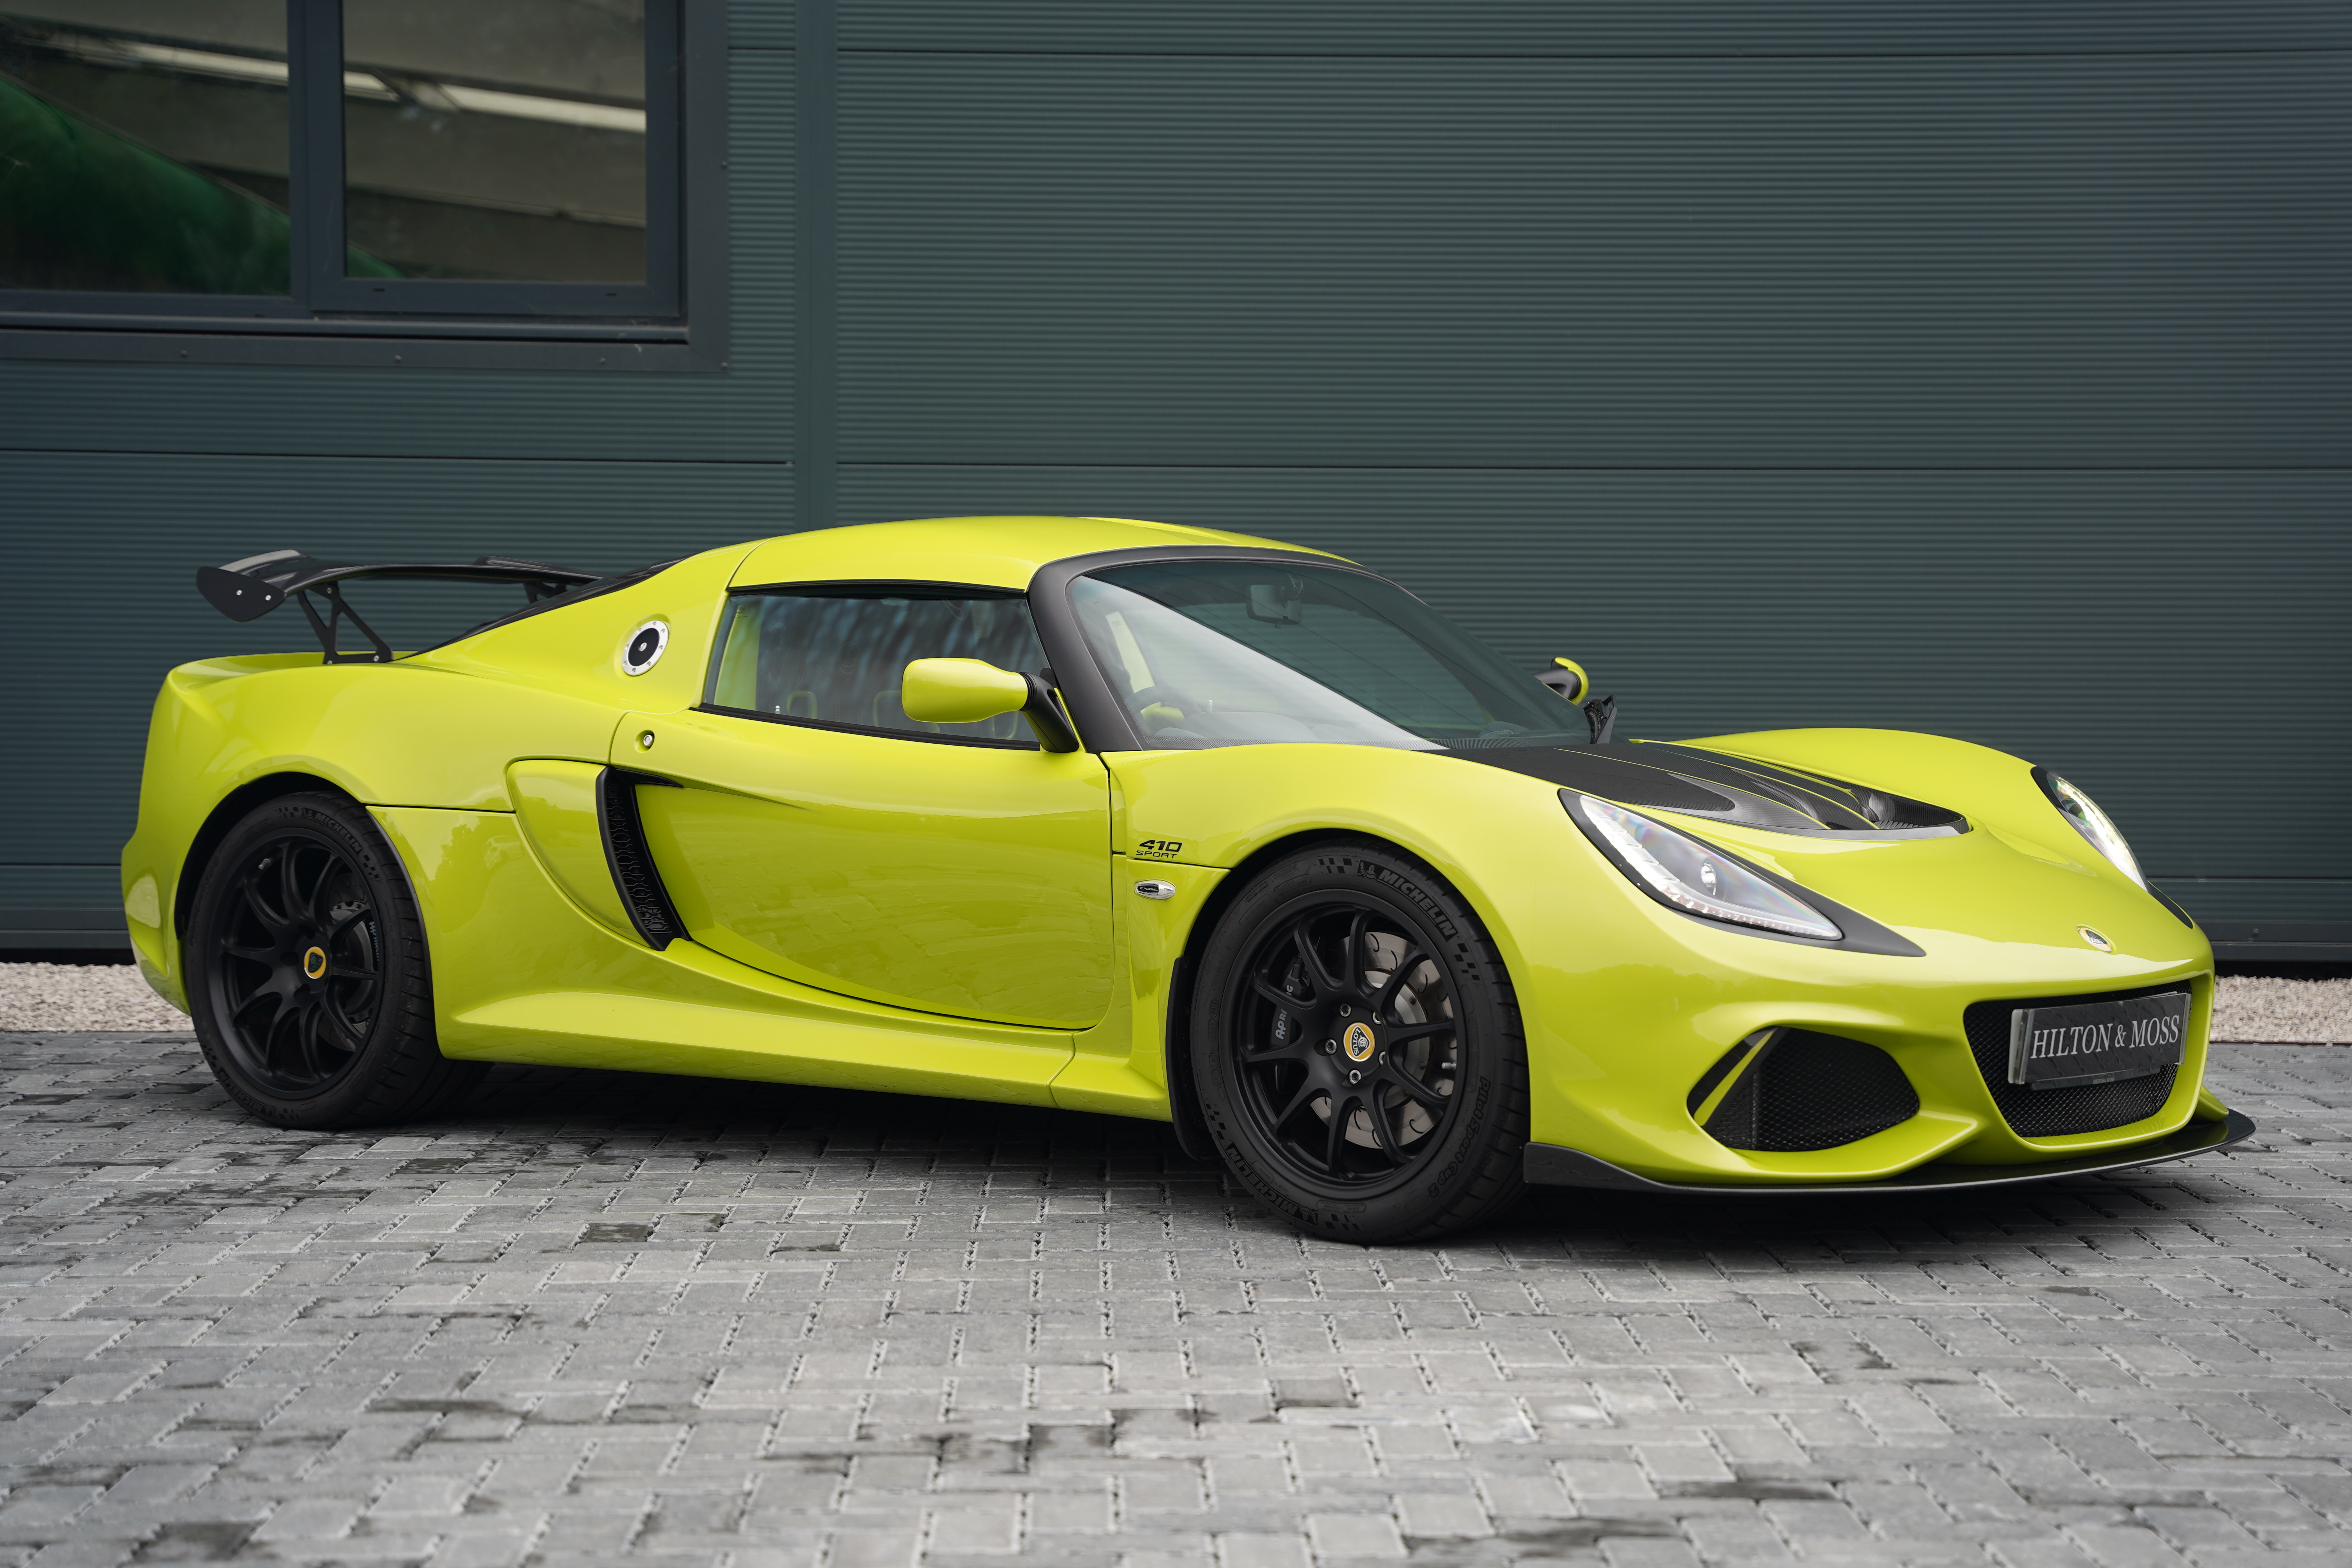 2021 Lotus Exige Sport 410 For Sale | Hilton & Moss